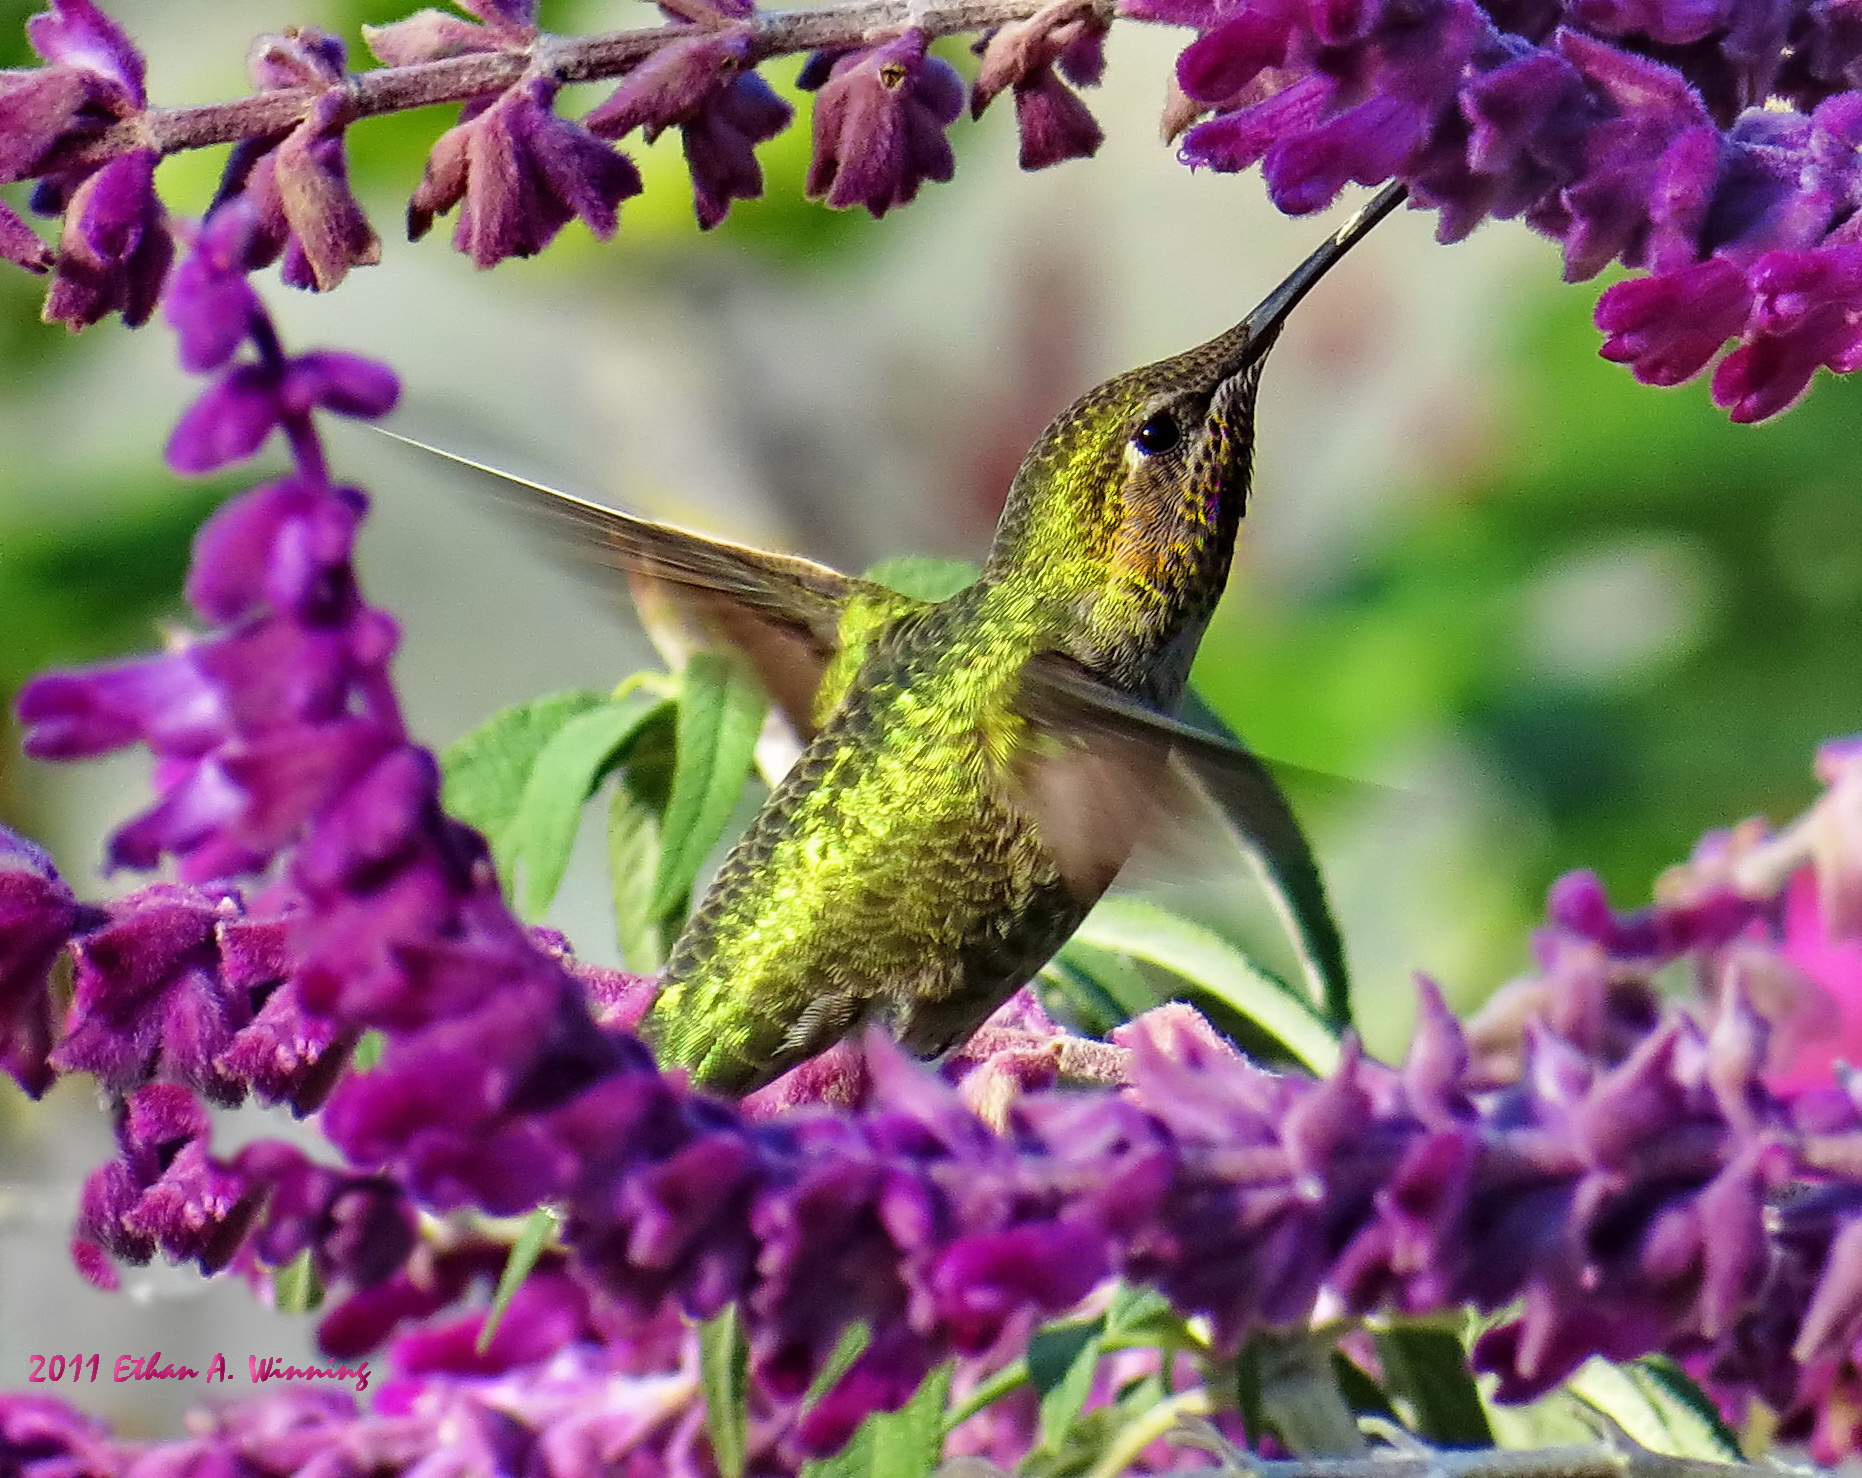 Awesome Hummingbird Image